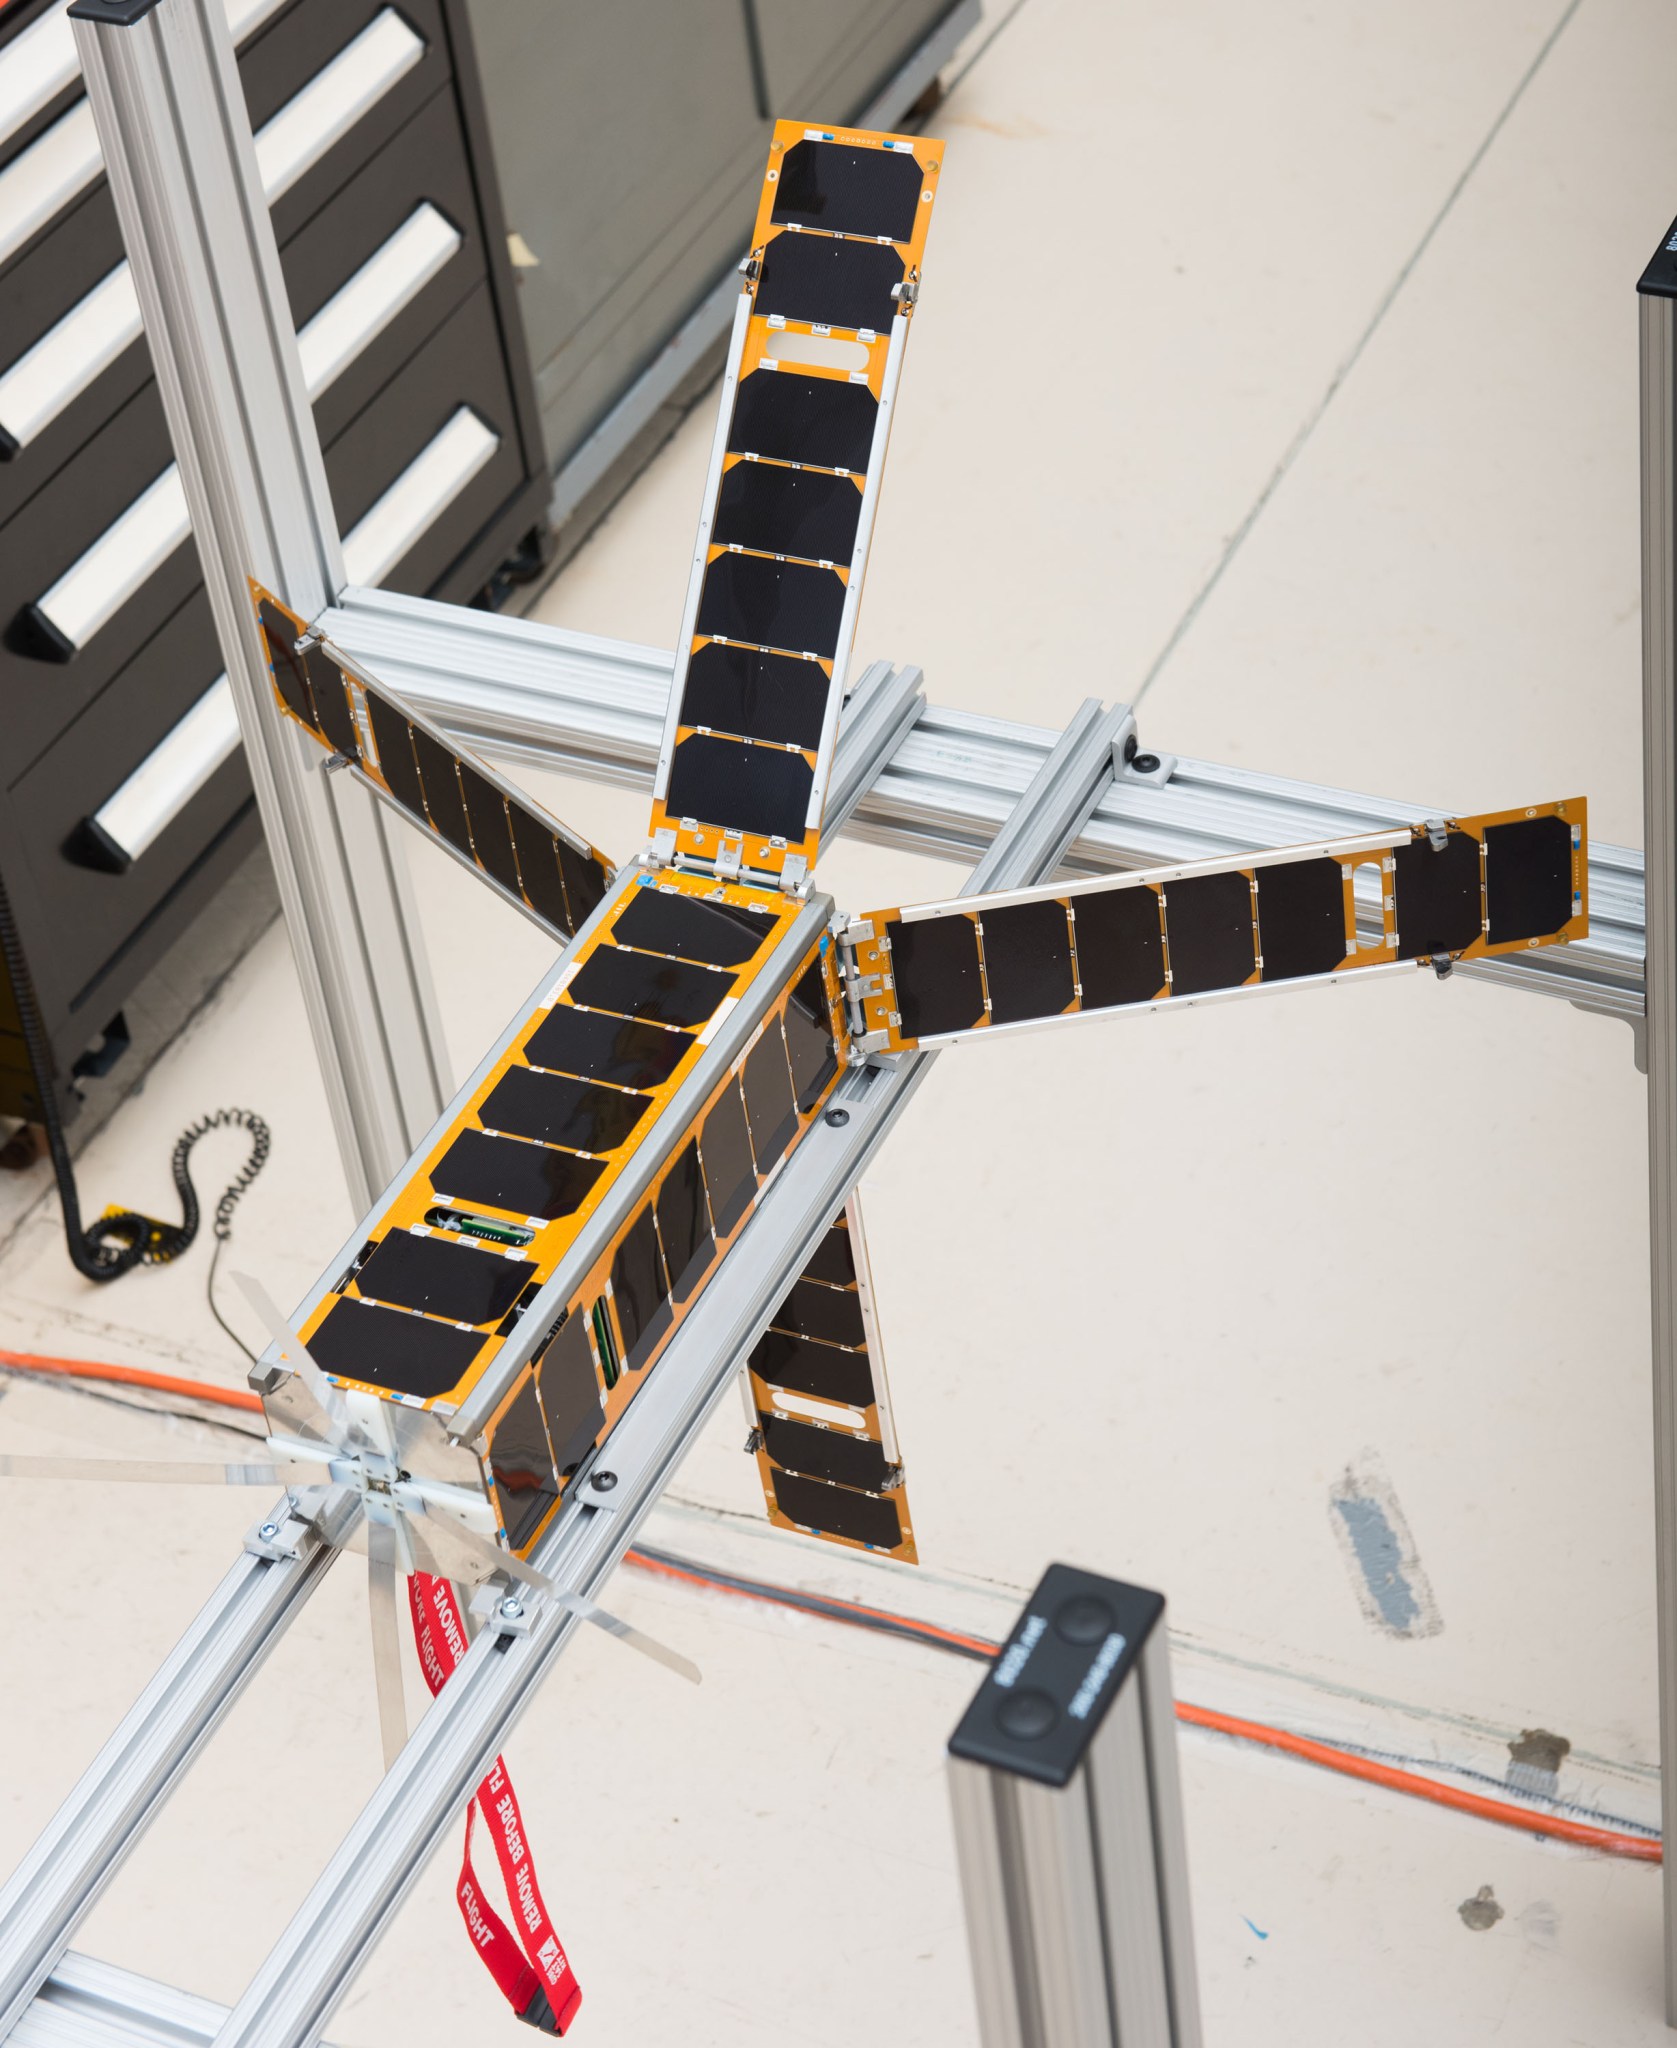 The ALBus CubeSat sits at NASA Glenn with its four solar array deployed. The solar arrays on this high-power CubeSat use a custo